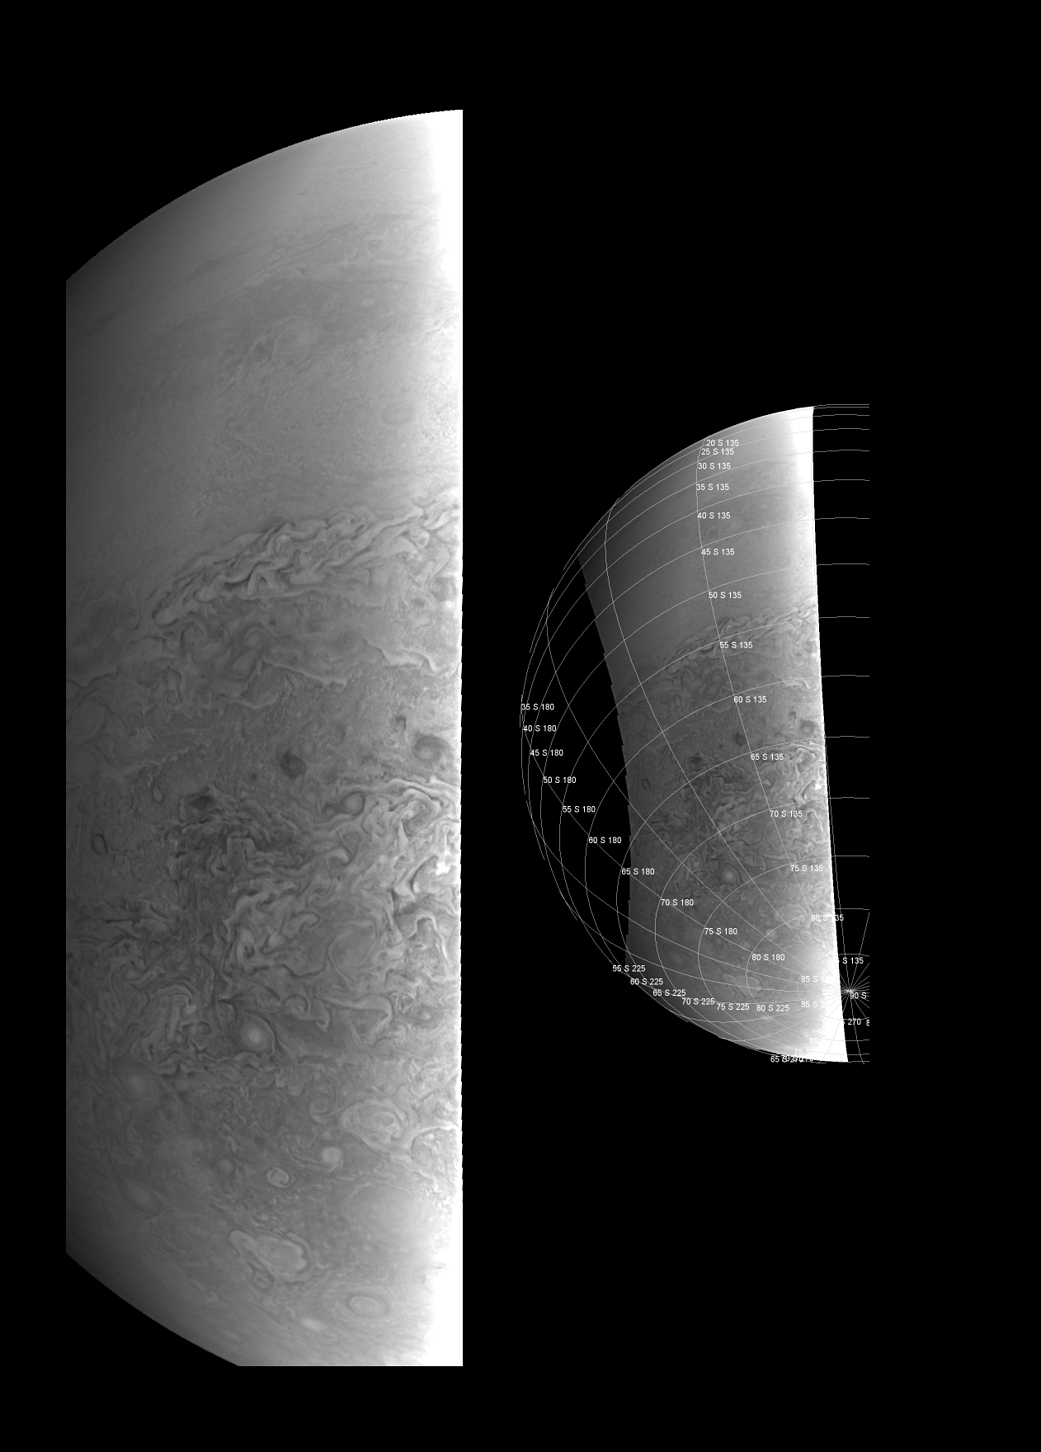 Southern hemisphere view of Jupiter